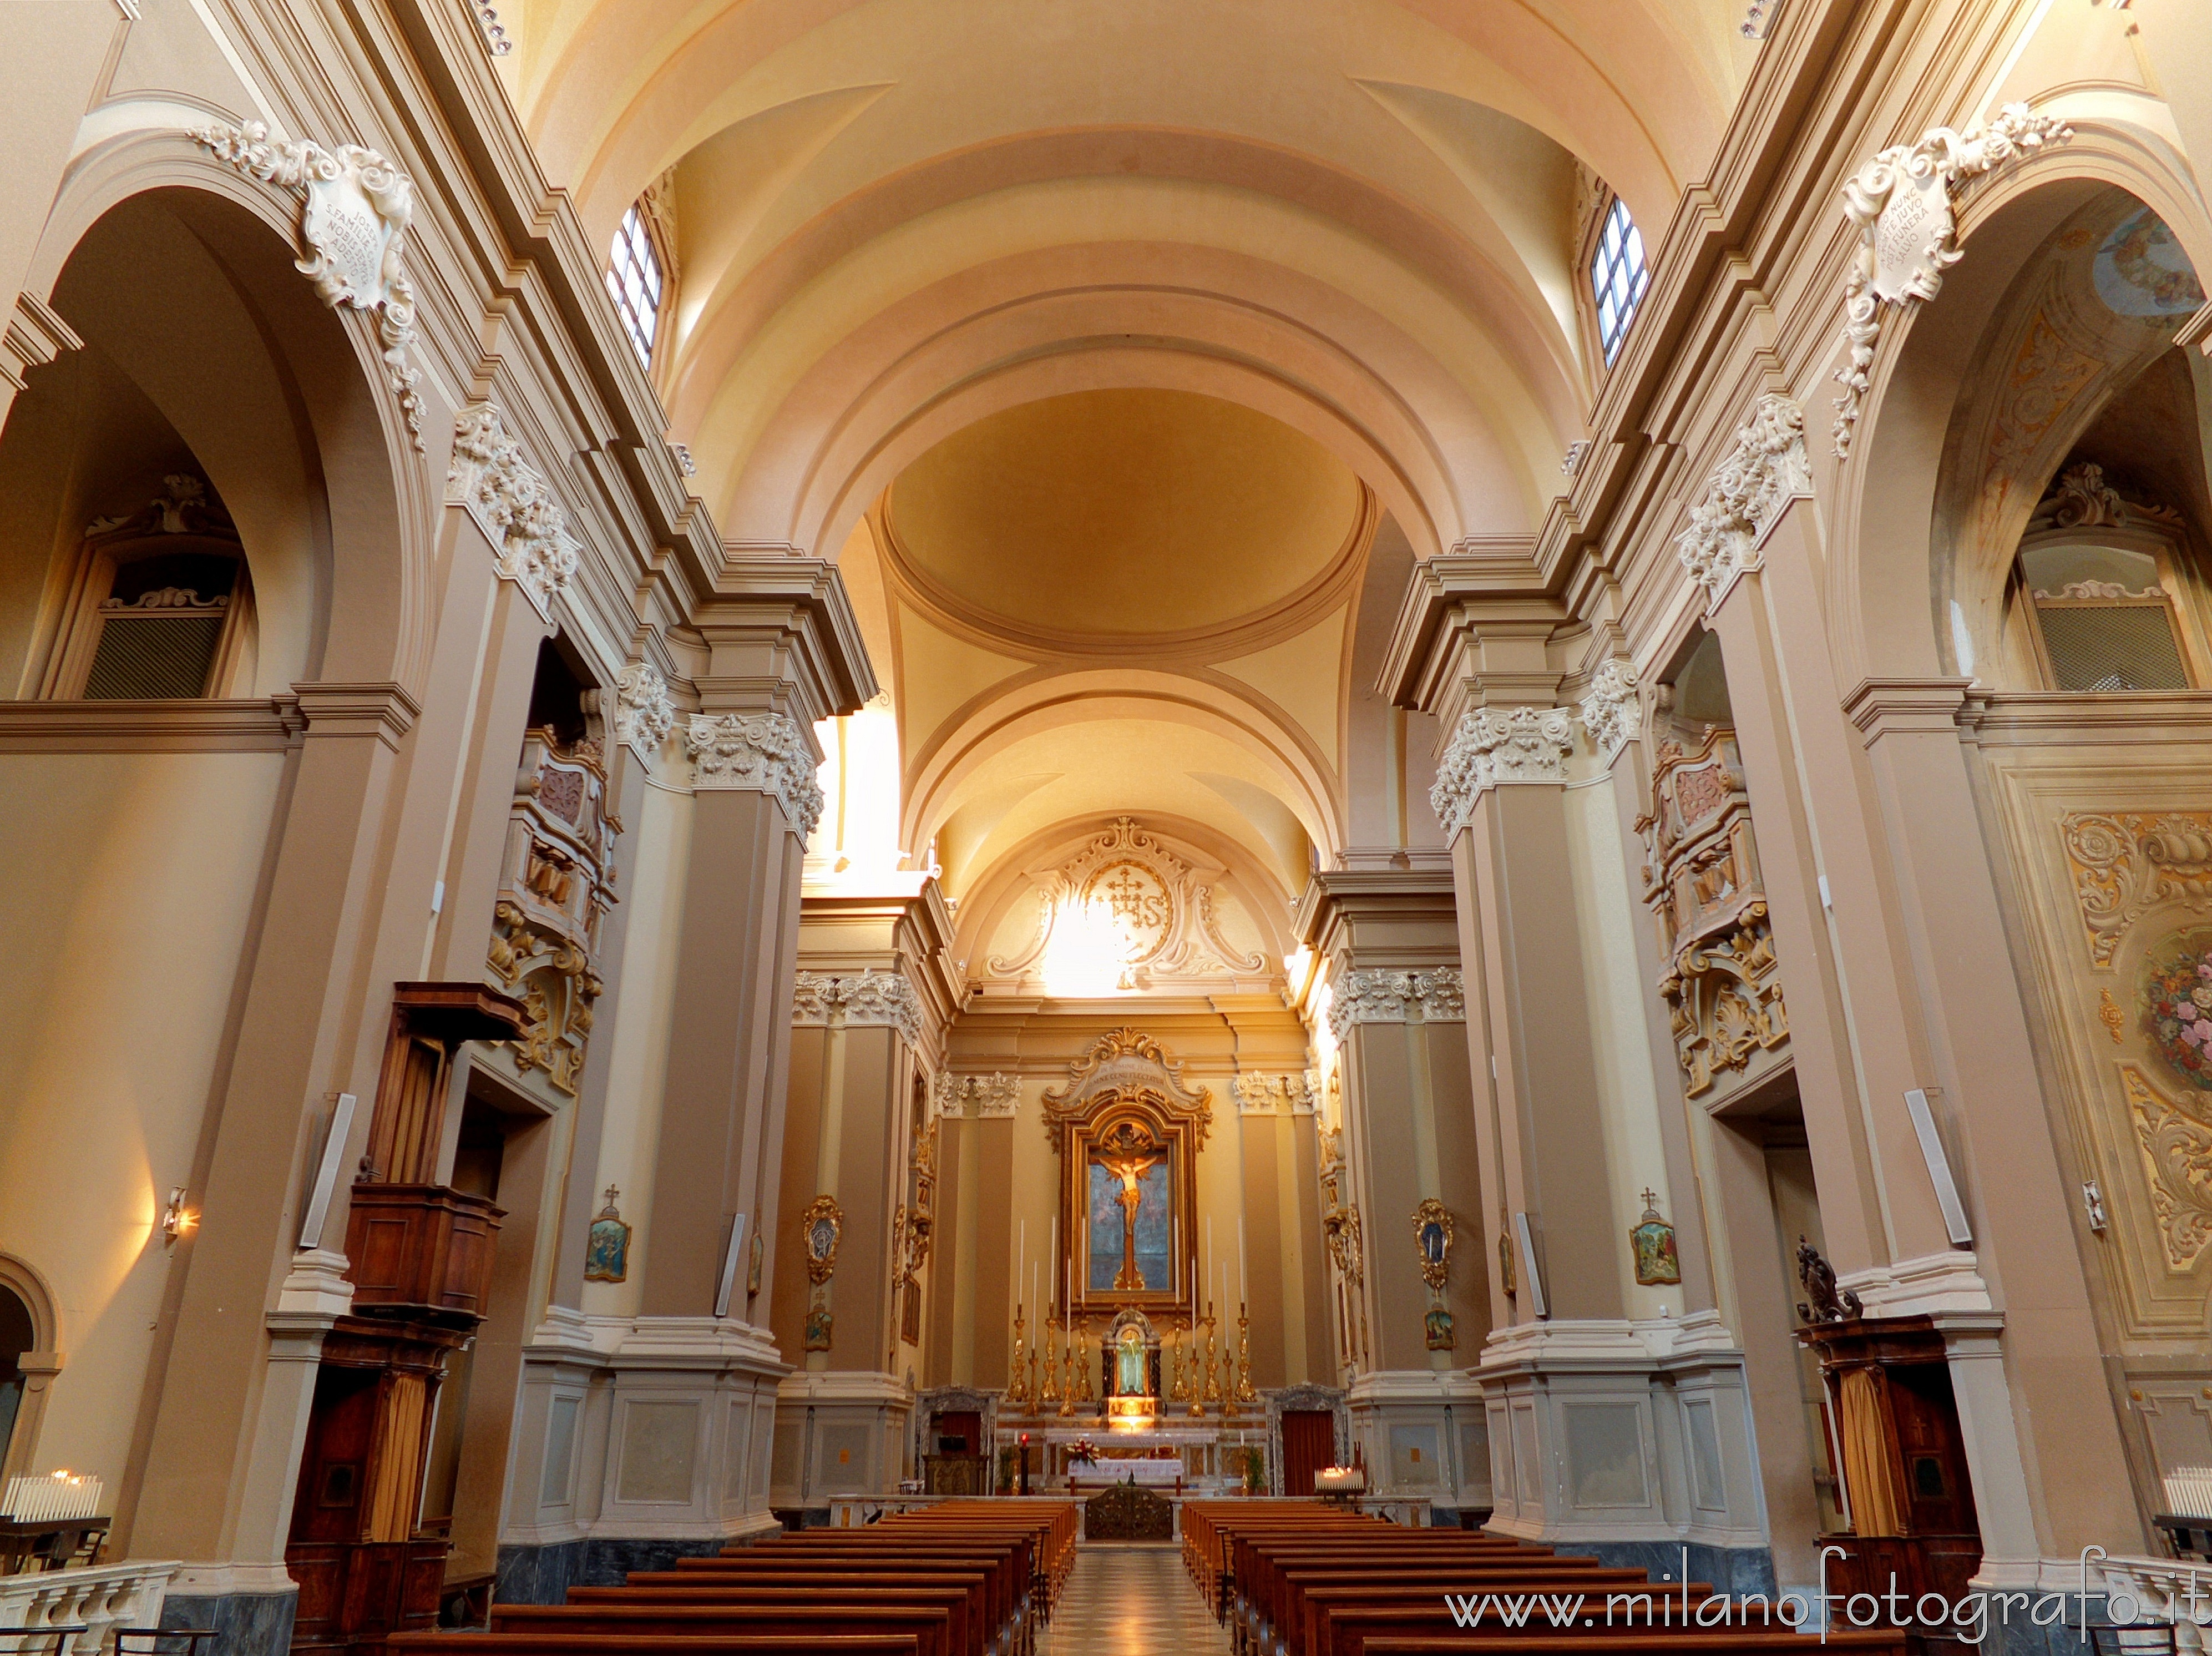 Rimini (Italy): Interior of the Church of San Francesco Saverio, alias Church of the Suffrage - Rimini (Italy)